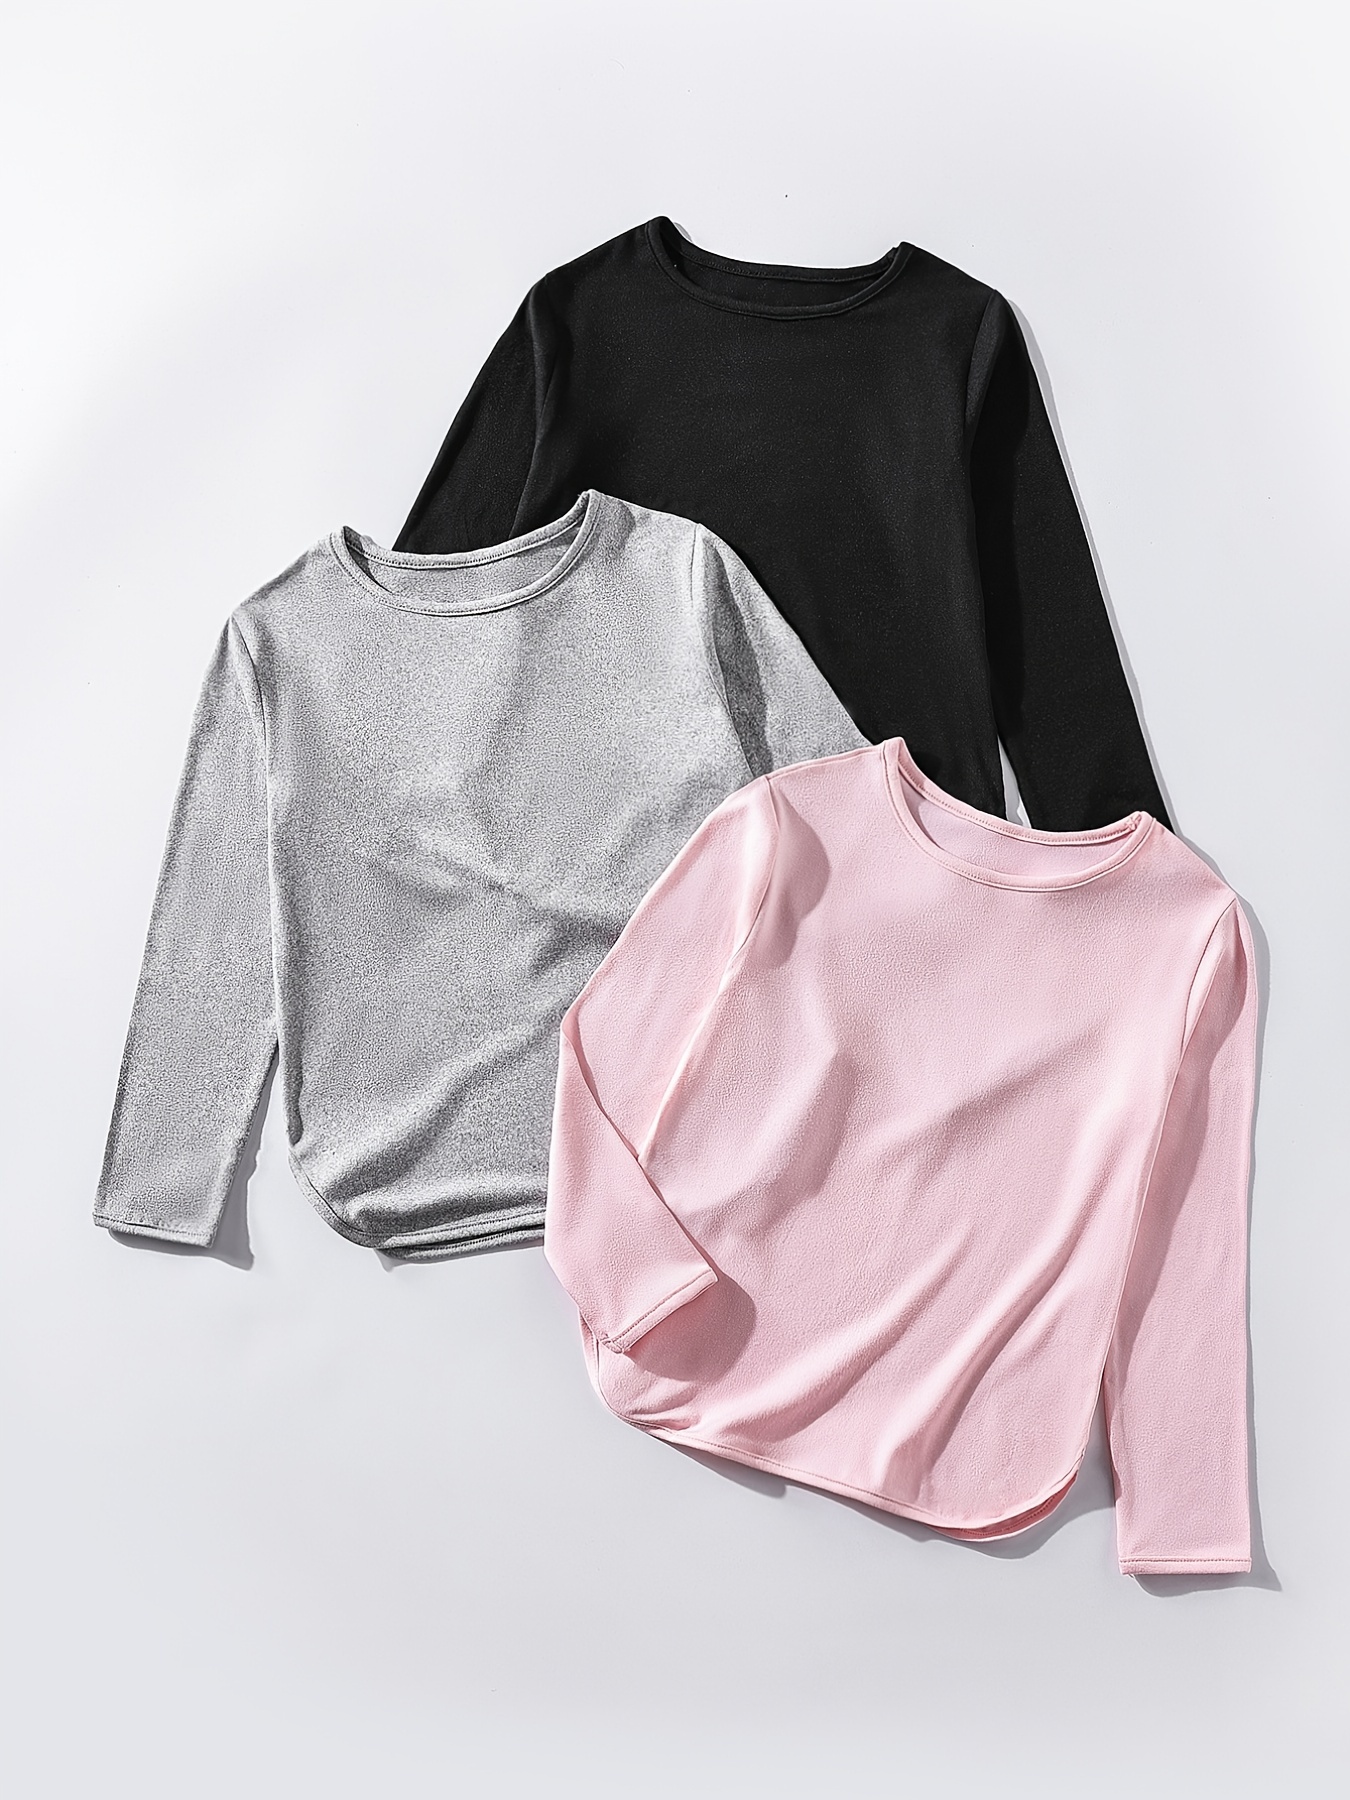 Baby Boys 3pcs Casual Comfortable Breathable Versatile T-Shirt, Shirt & Jacket Set,0-1M , Multicolor by Shein